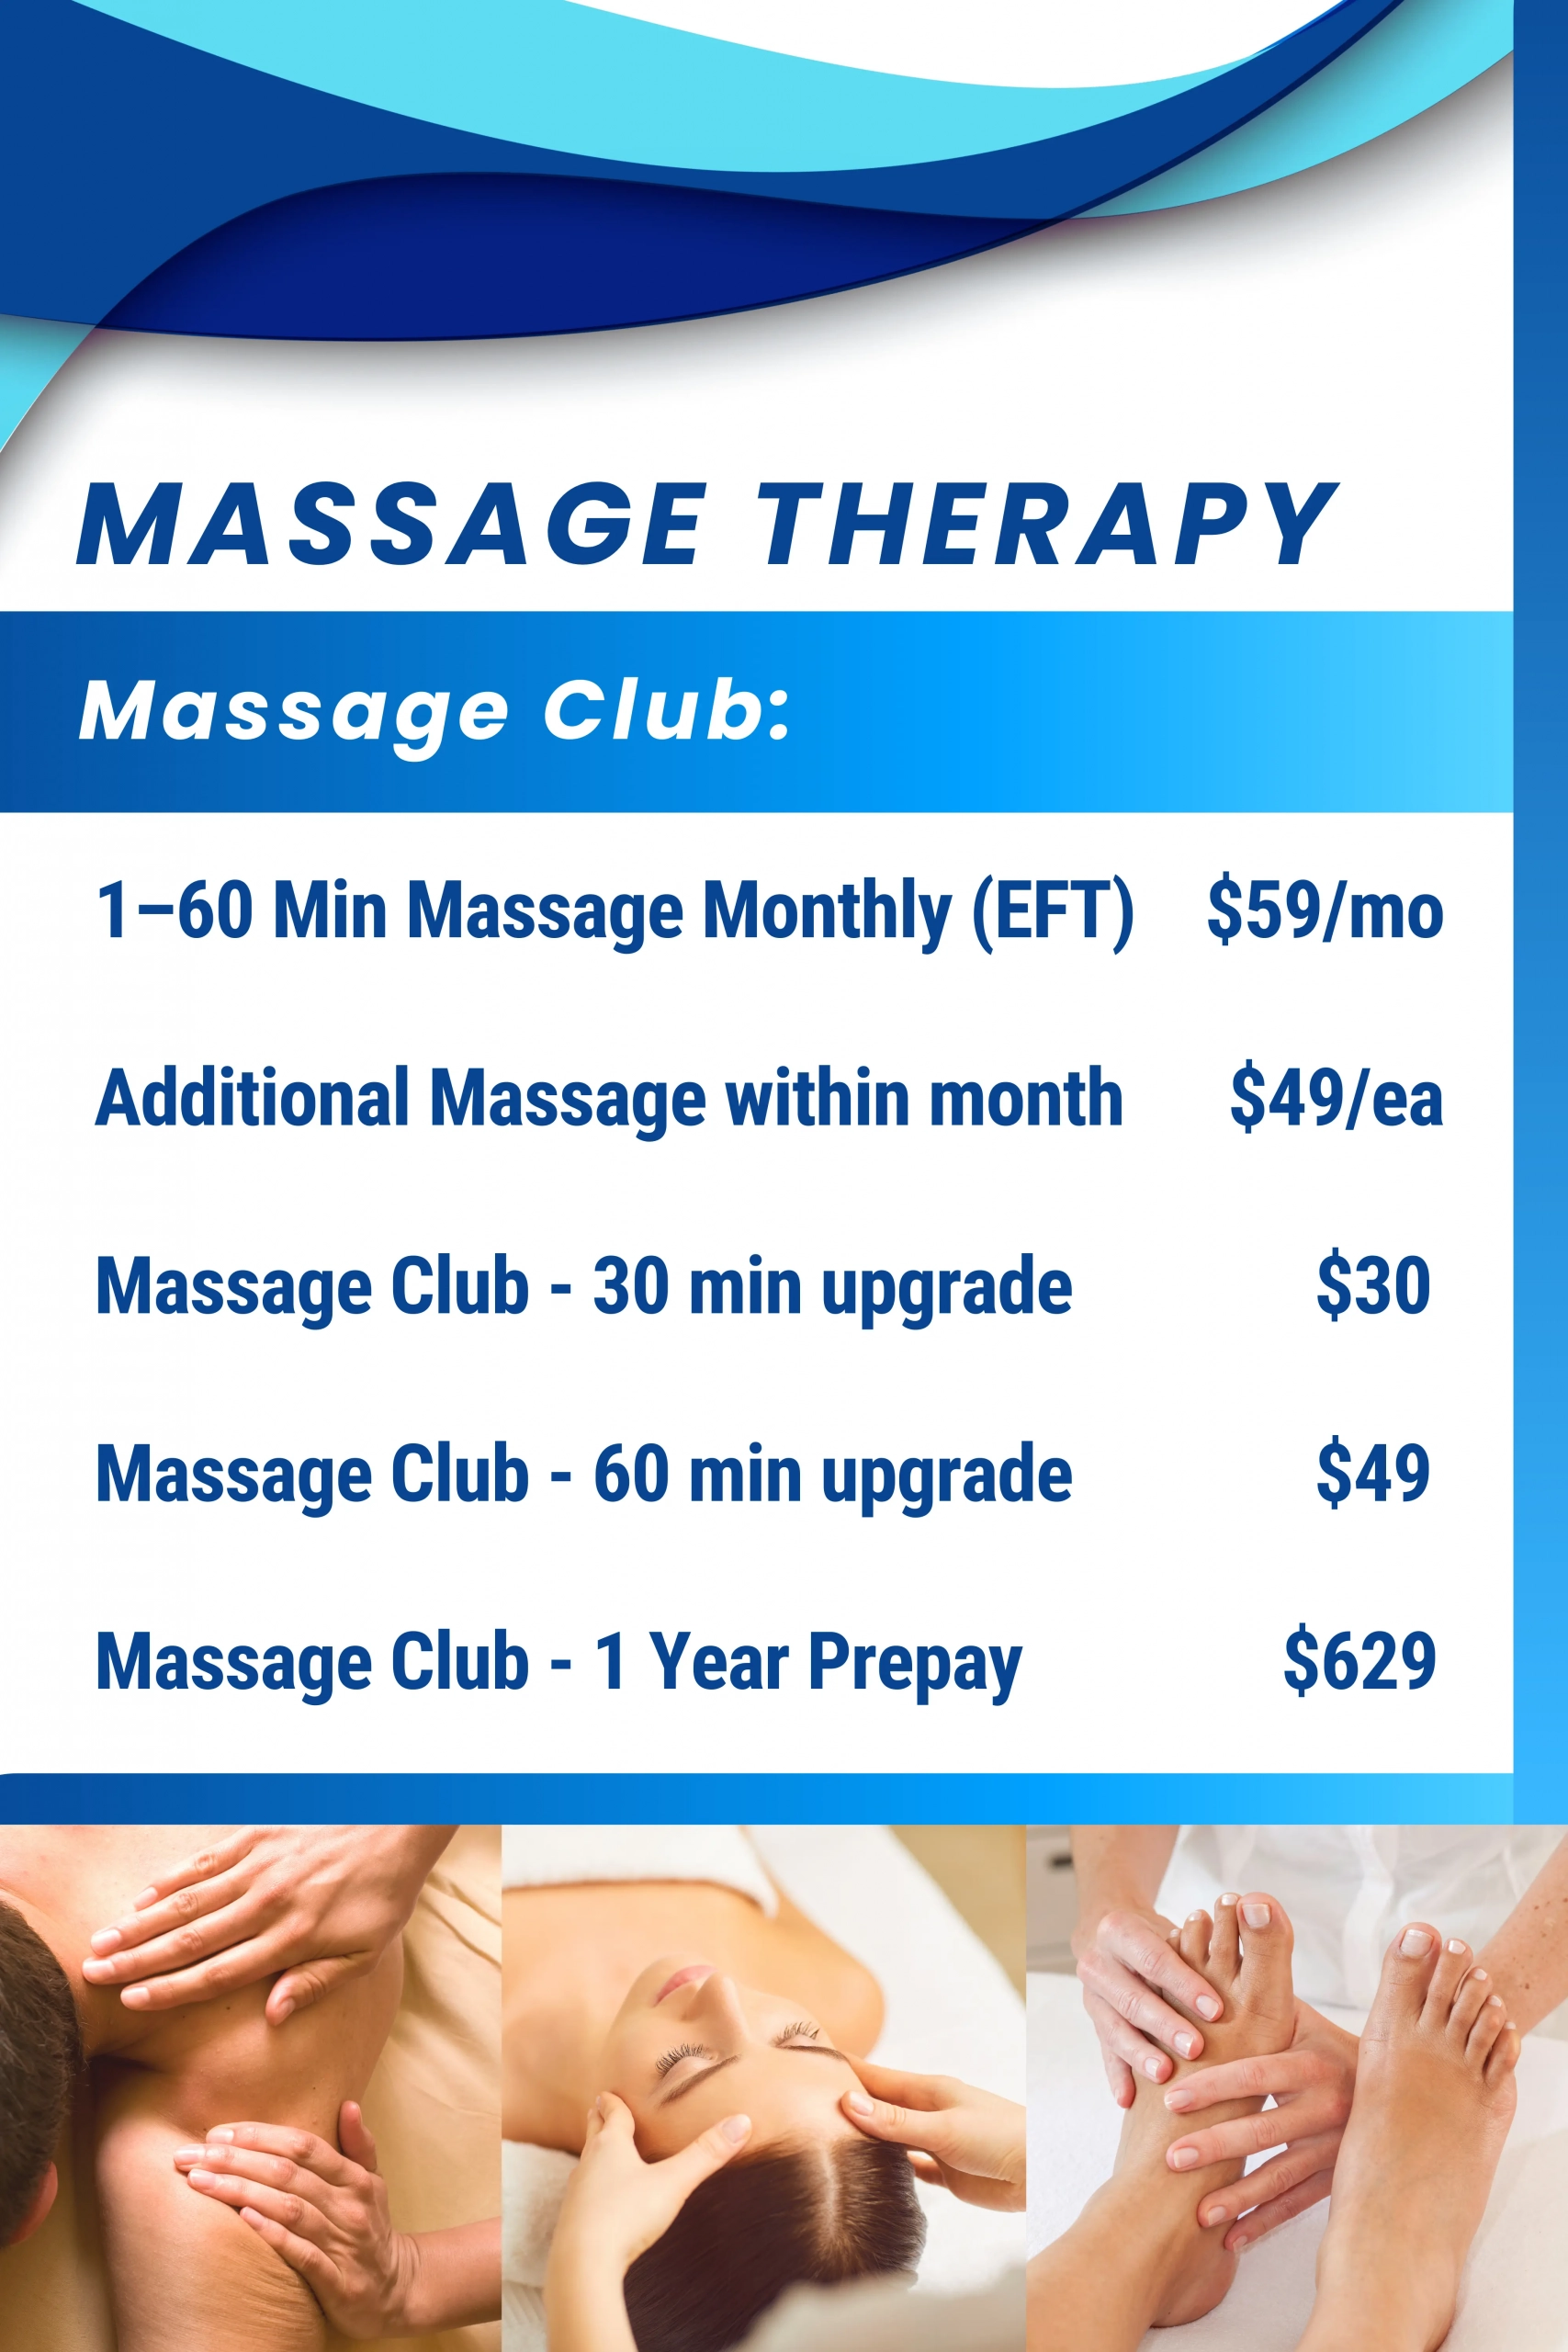 massage club price list- 1 to 60 minutes per month $59/month